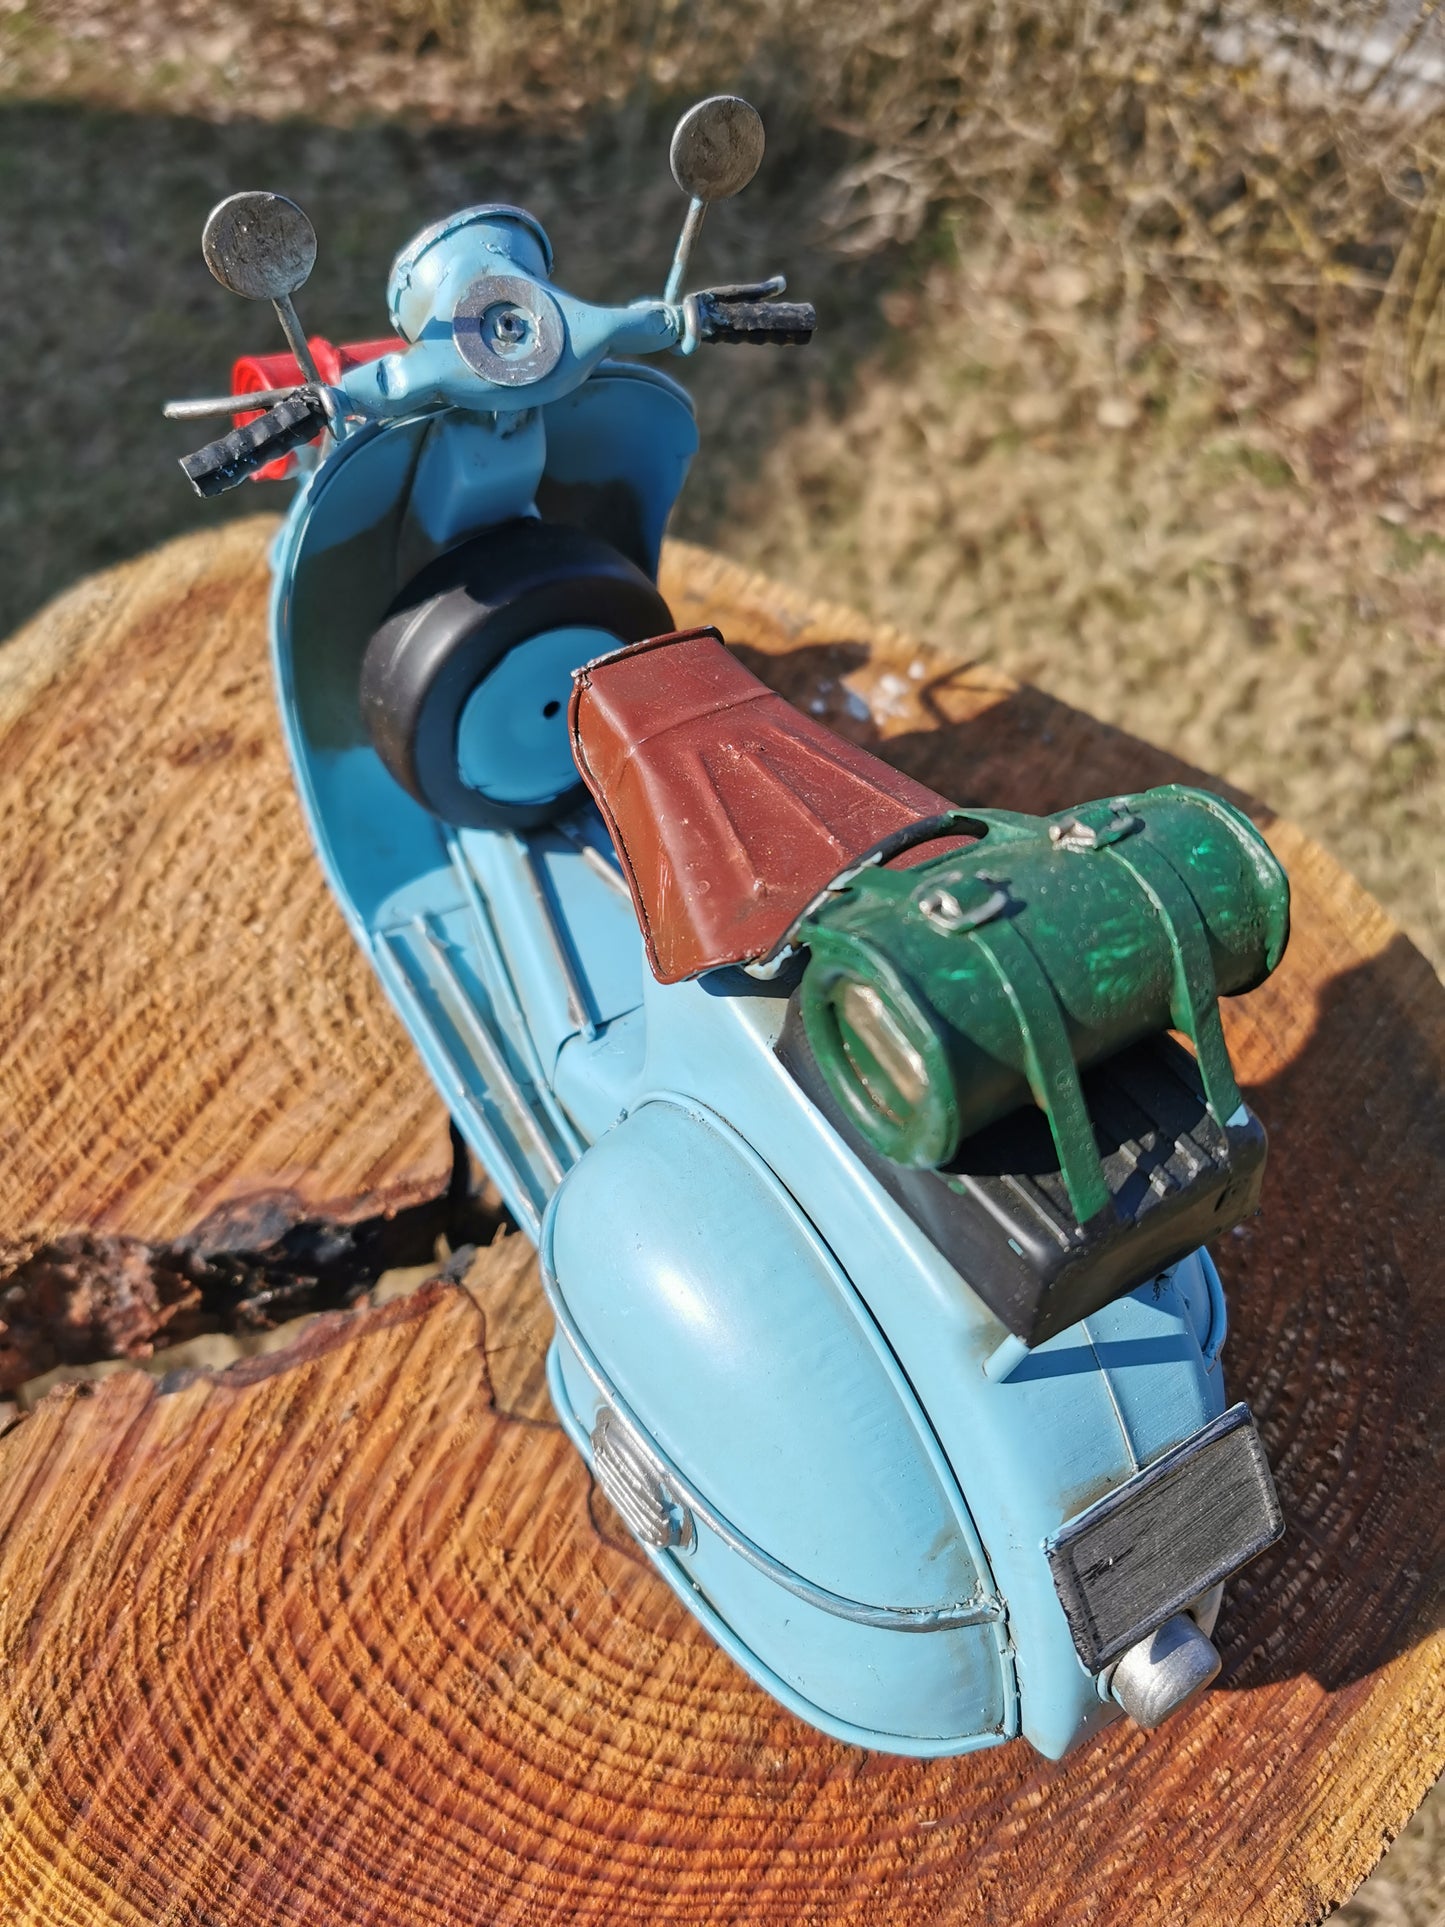 Roller Blechmodell hellblau im Vintage-Design